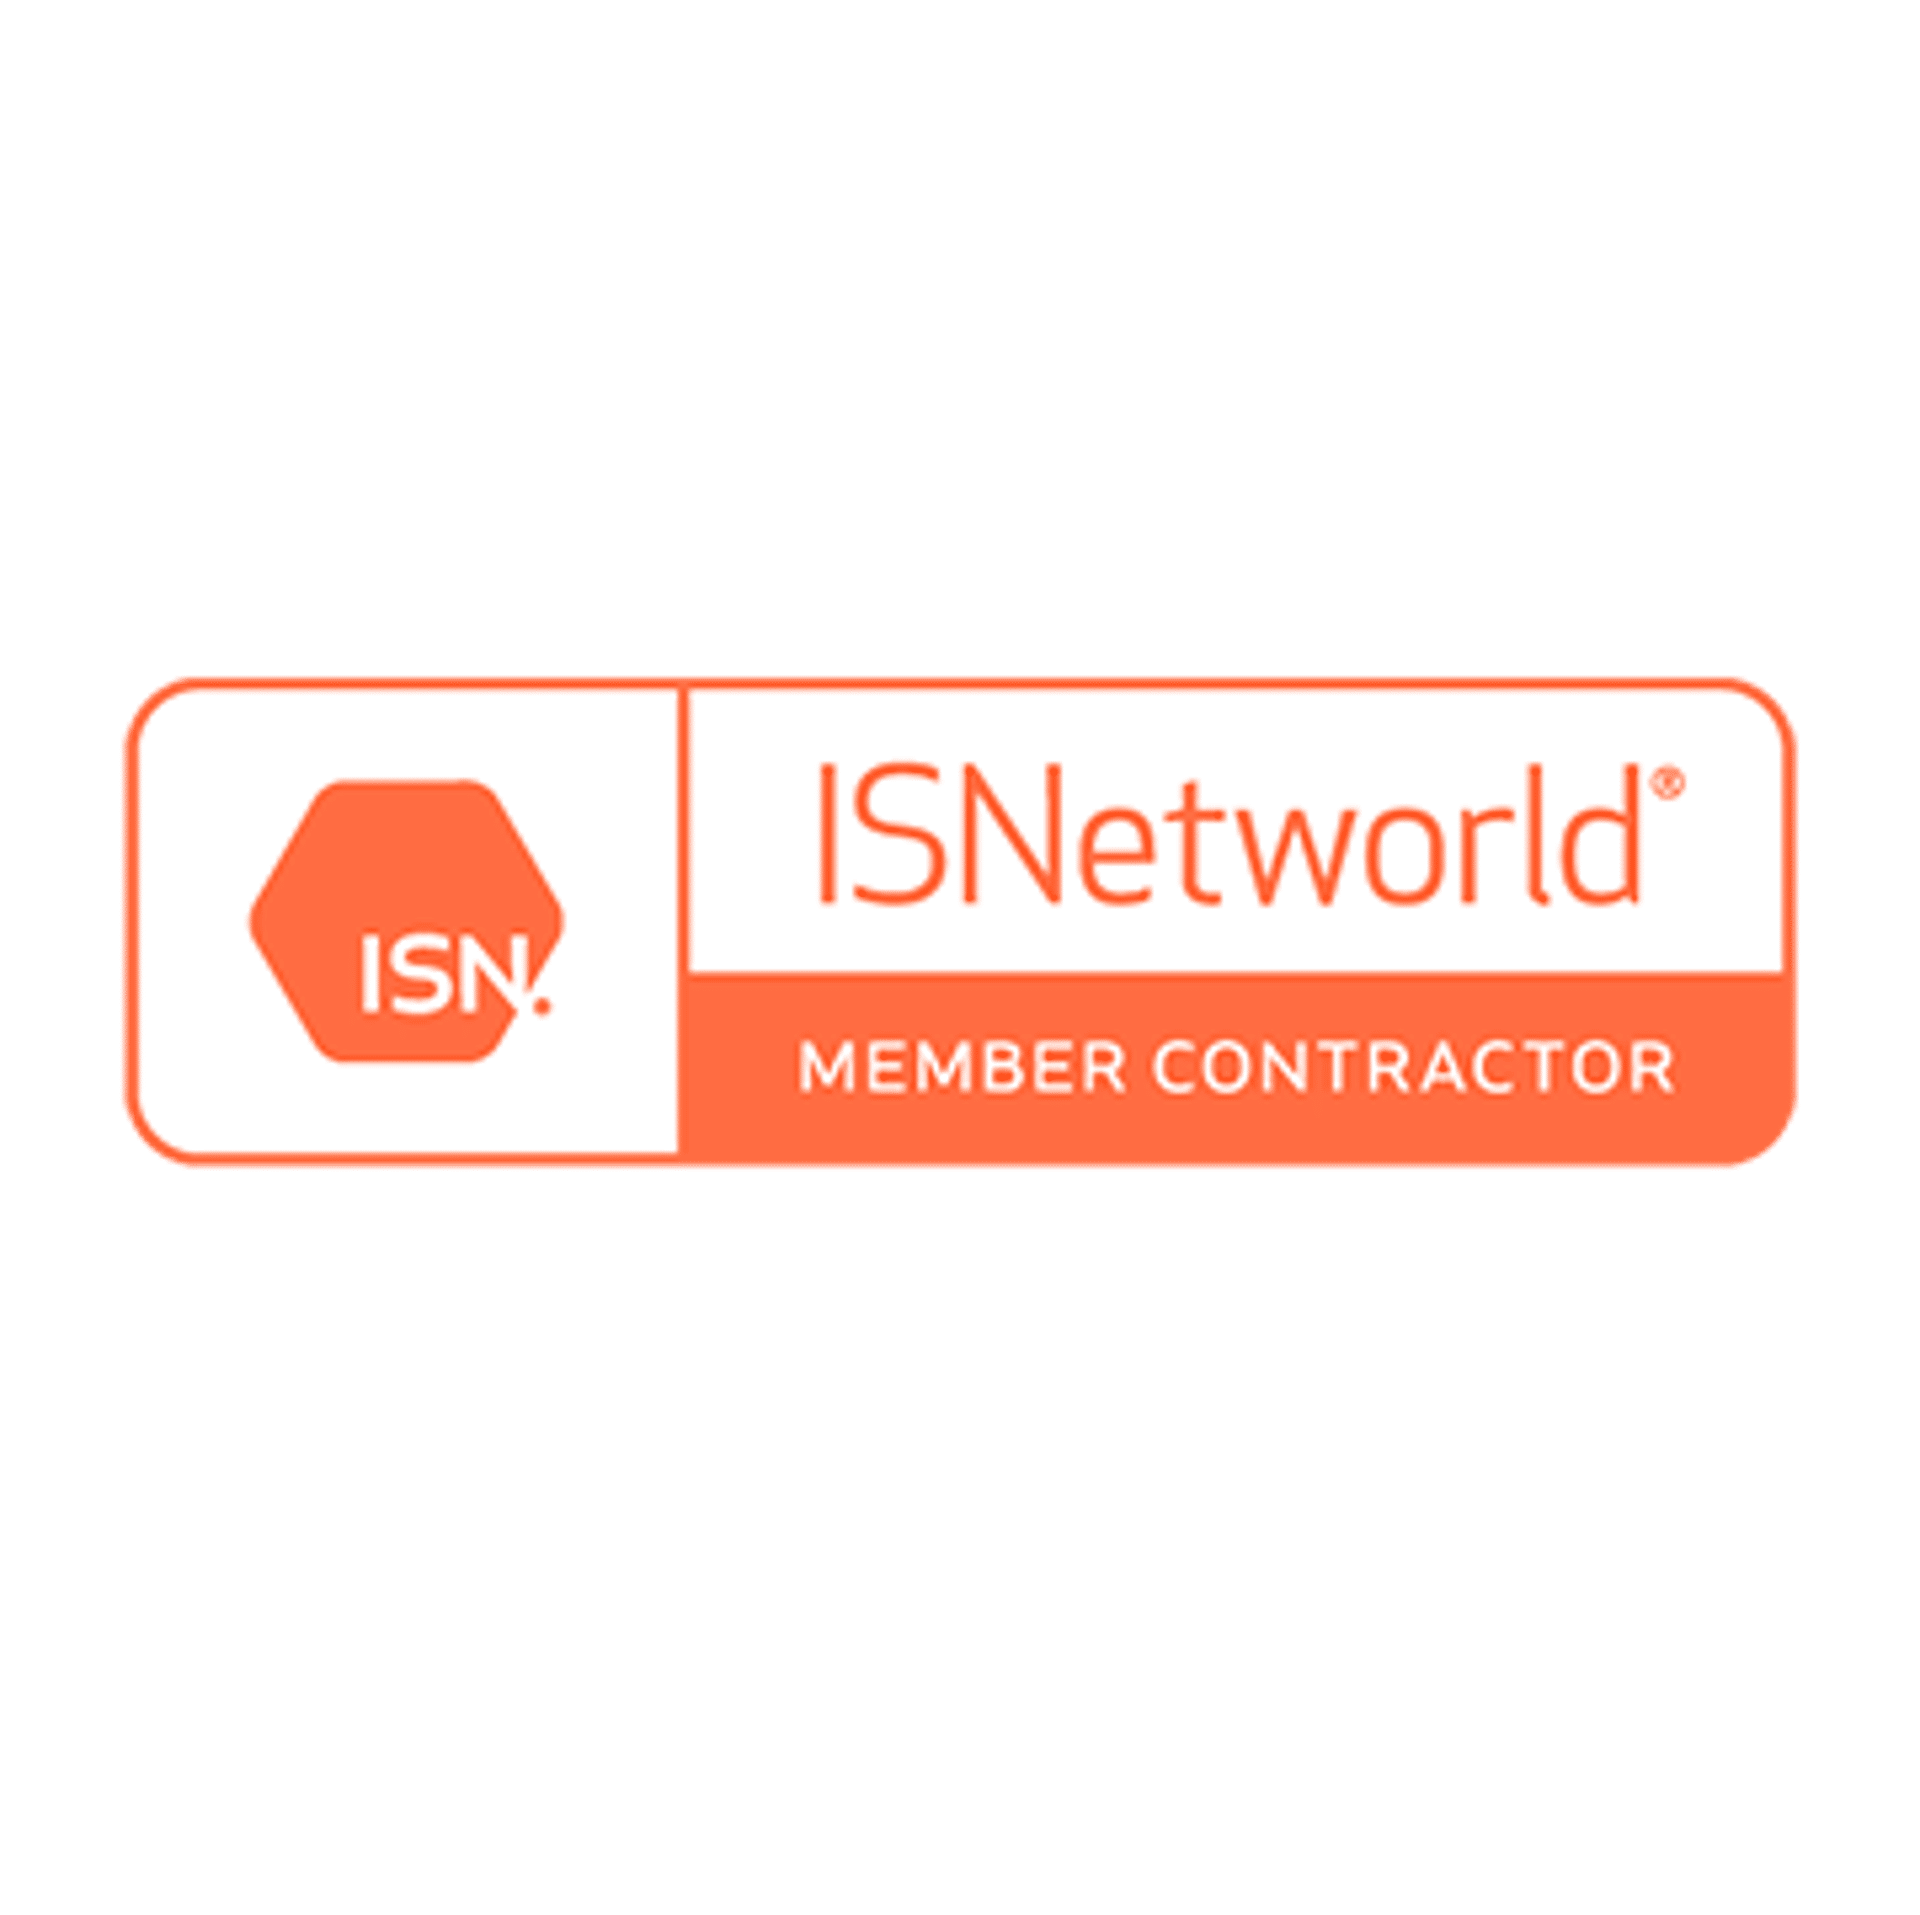 ISN ISNetworld Member Contractor logo